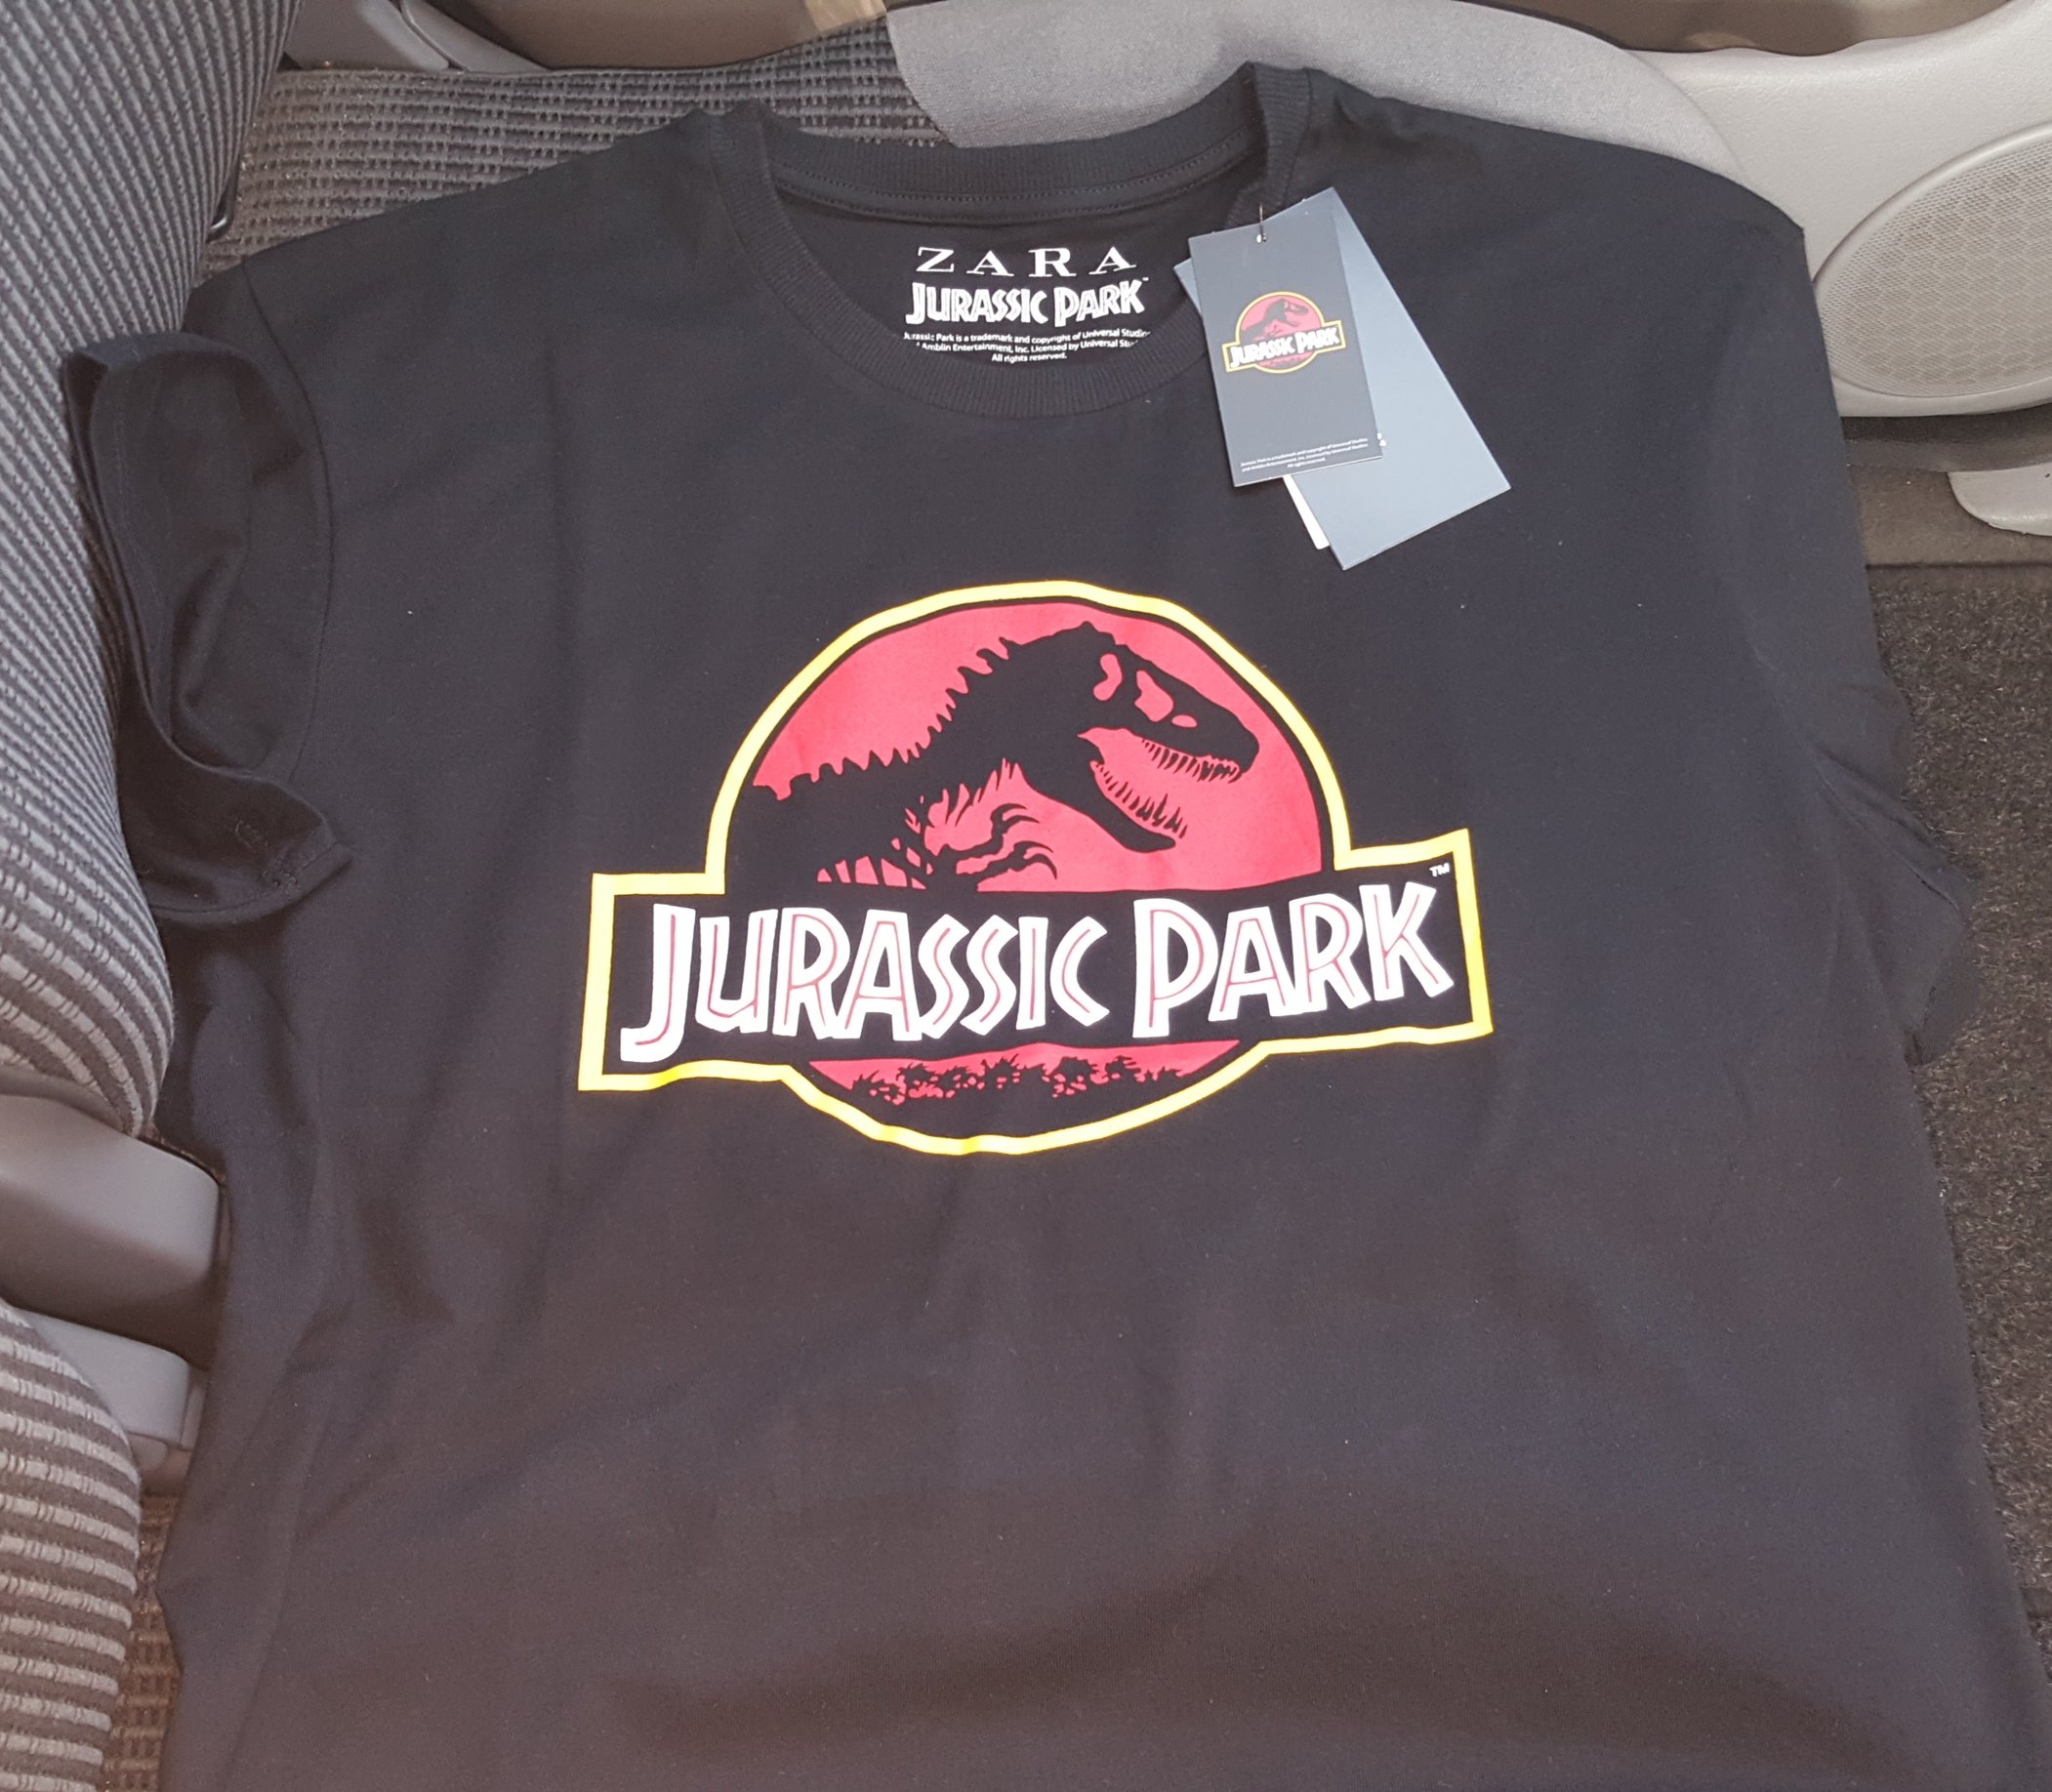 تويتر \ Jurassic Park Saga على تويتر: adquisición: Camiseta #JurassicPark en color Zara: https://t.co/eAeog2sue8 https://t.co/kdOYWTJVDn"